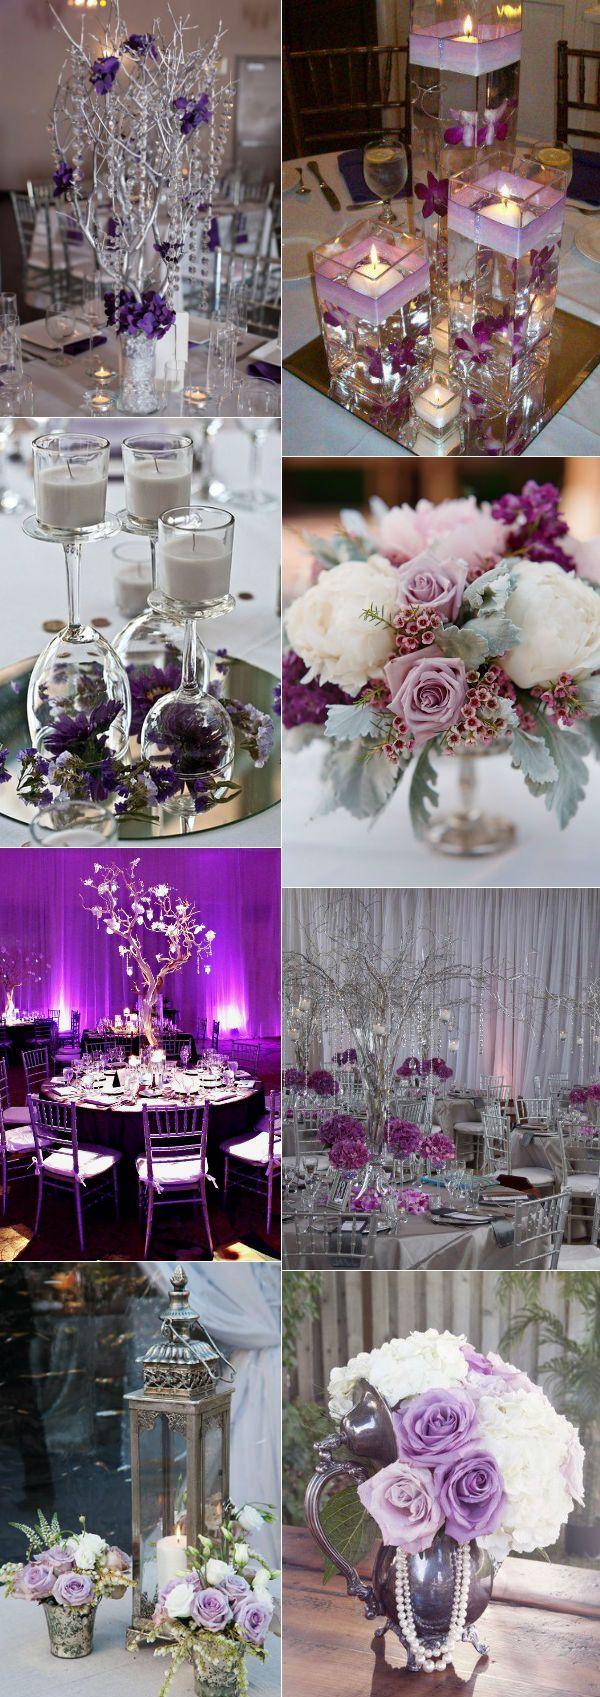 زفاف - Stunning Wedding Color Ideas In Shades Of Purple And Silver